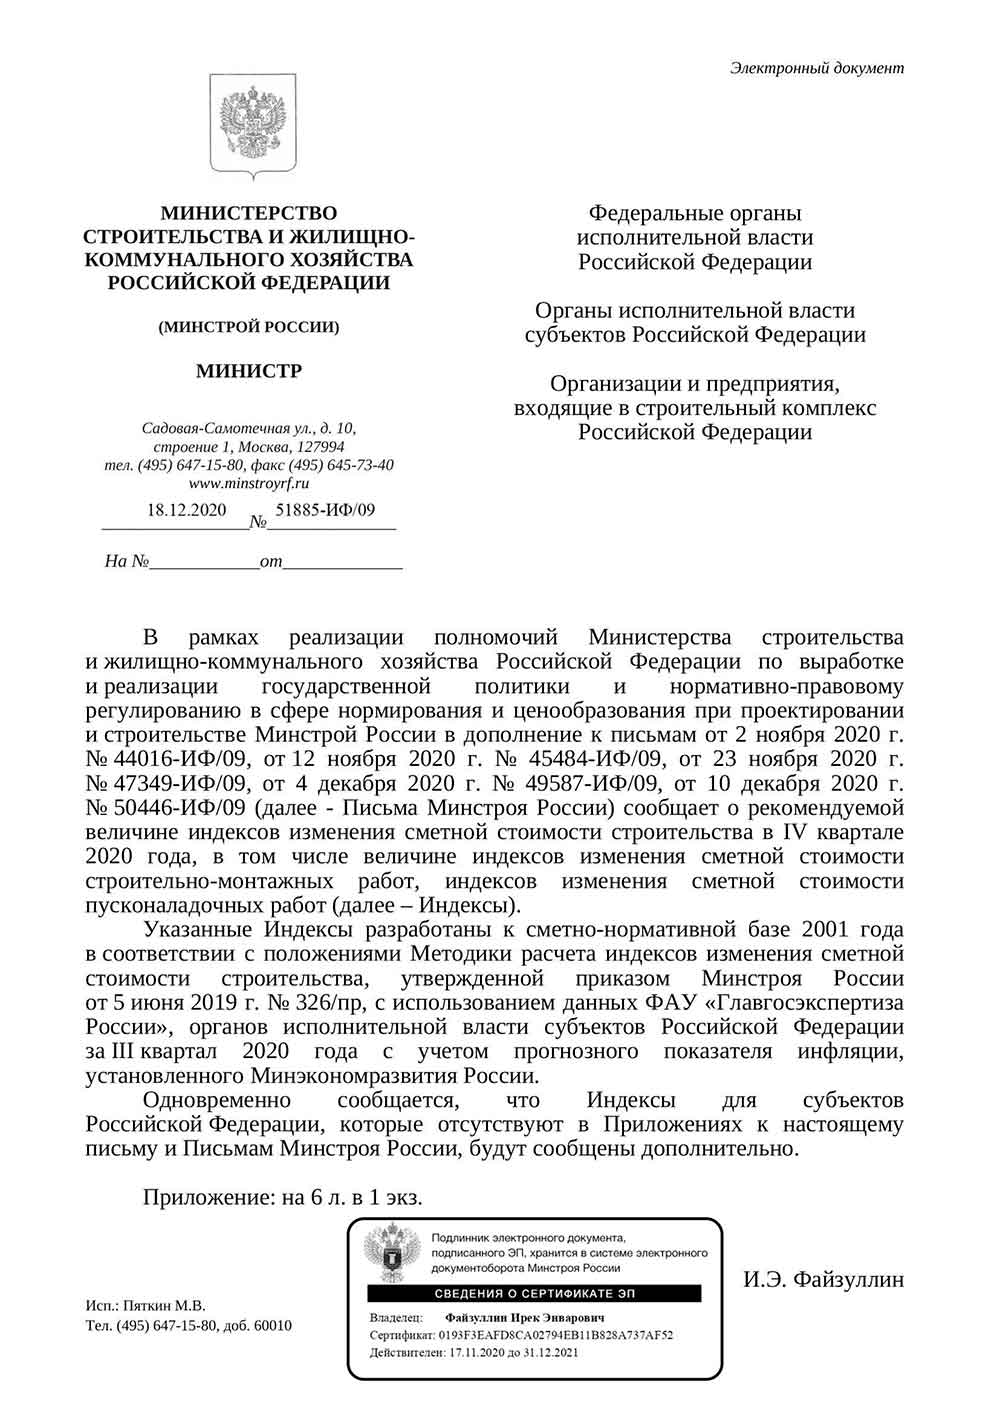 Письмо Минстроя РФ №51885-ИФ/09 от 18.12.2020 г.